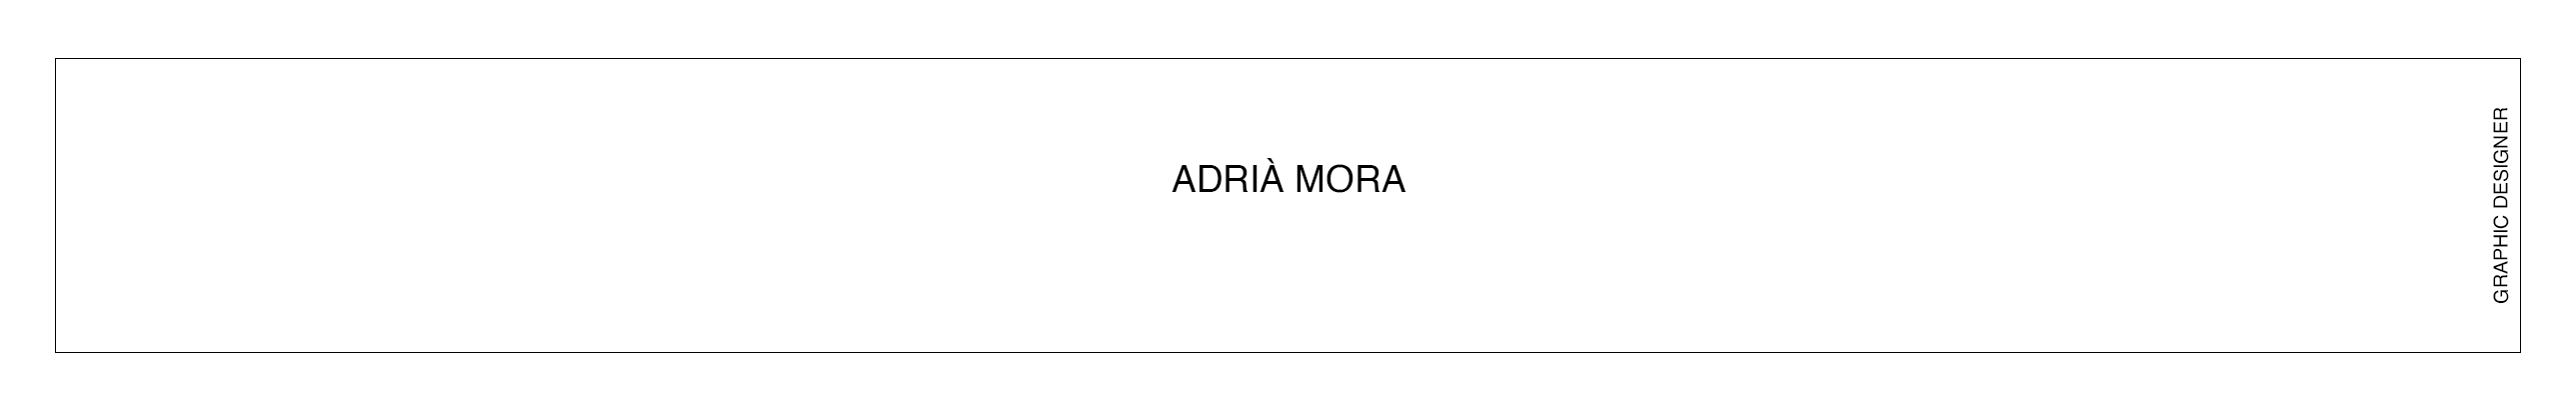 Adrià Mora 님의 프로필 배너